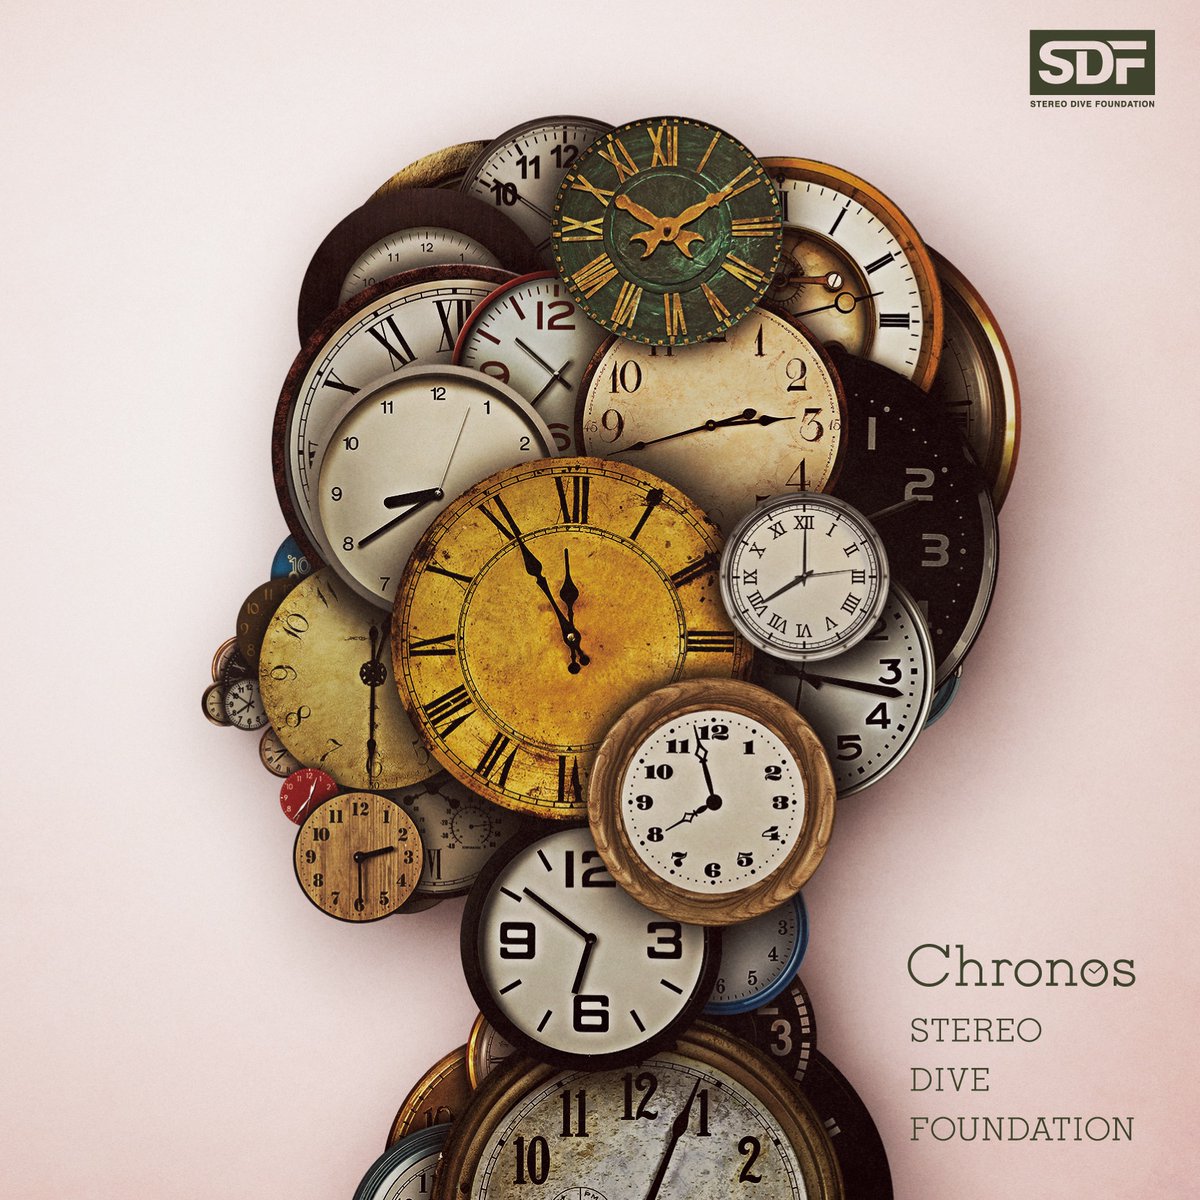 『STEREO DIVE FOUNDATION - Chronos』収録の『Chronos』ジャケット